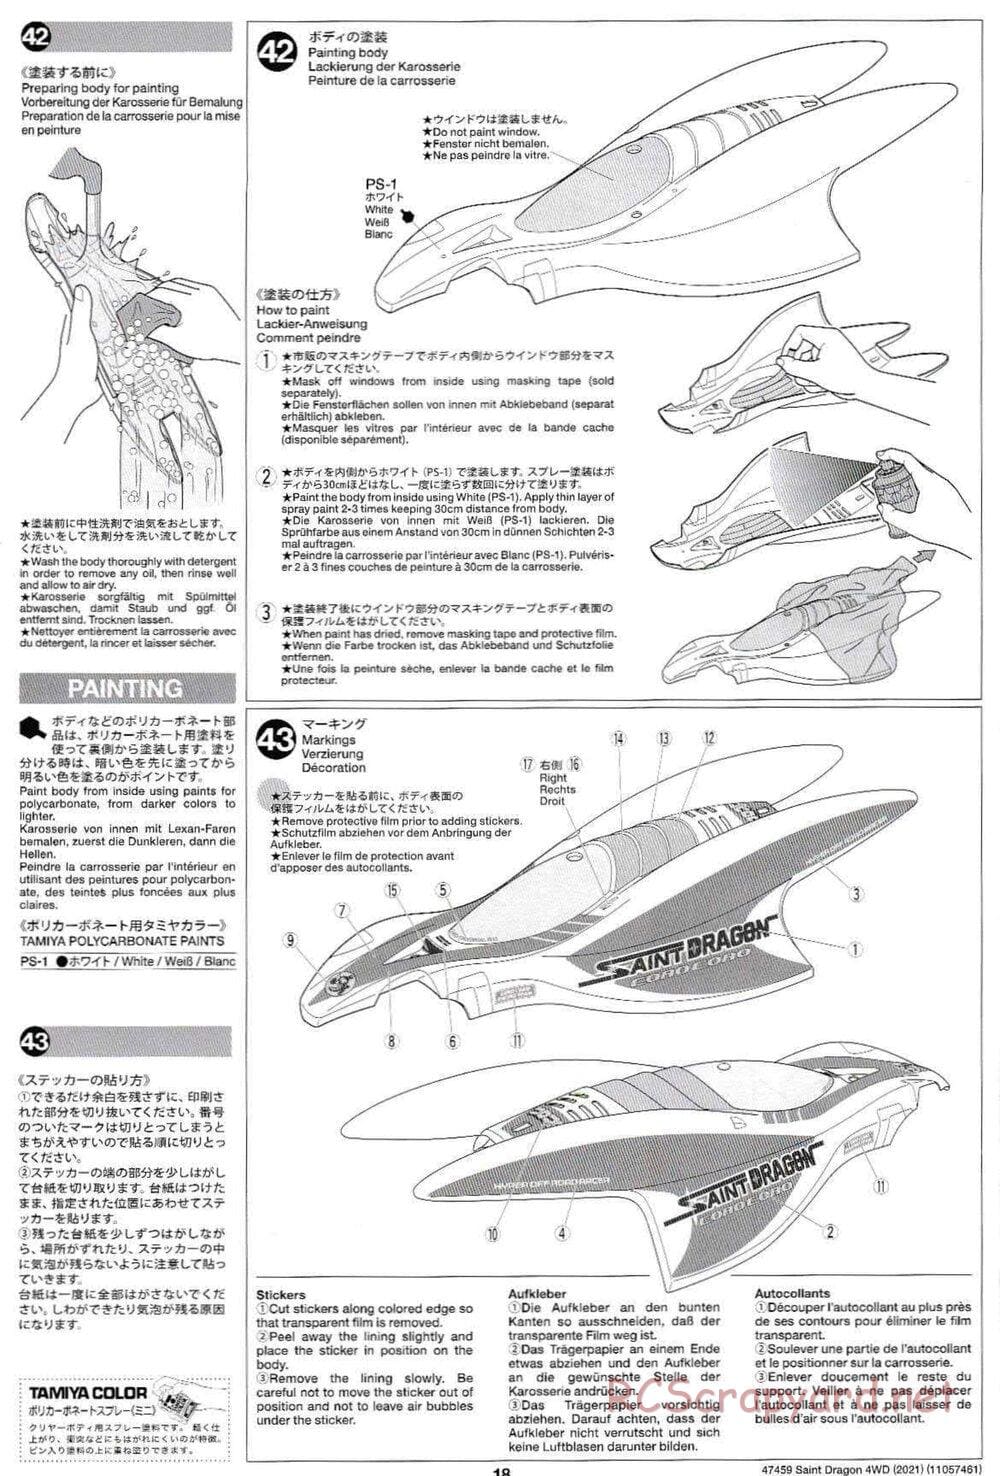 Tamiya - Saint Dragon (2021) Chassis - Manual - Page 18